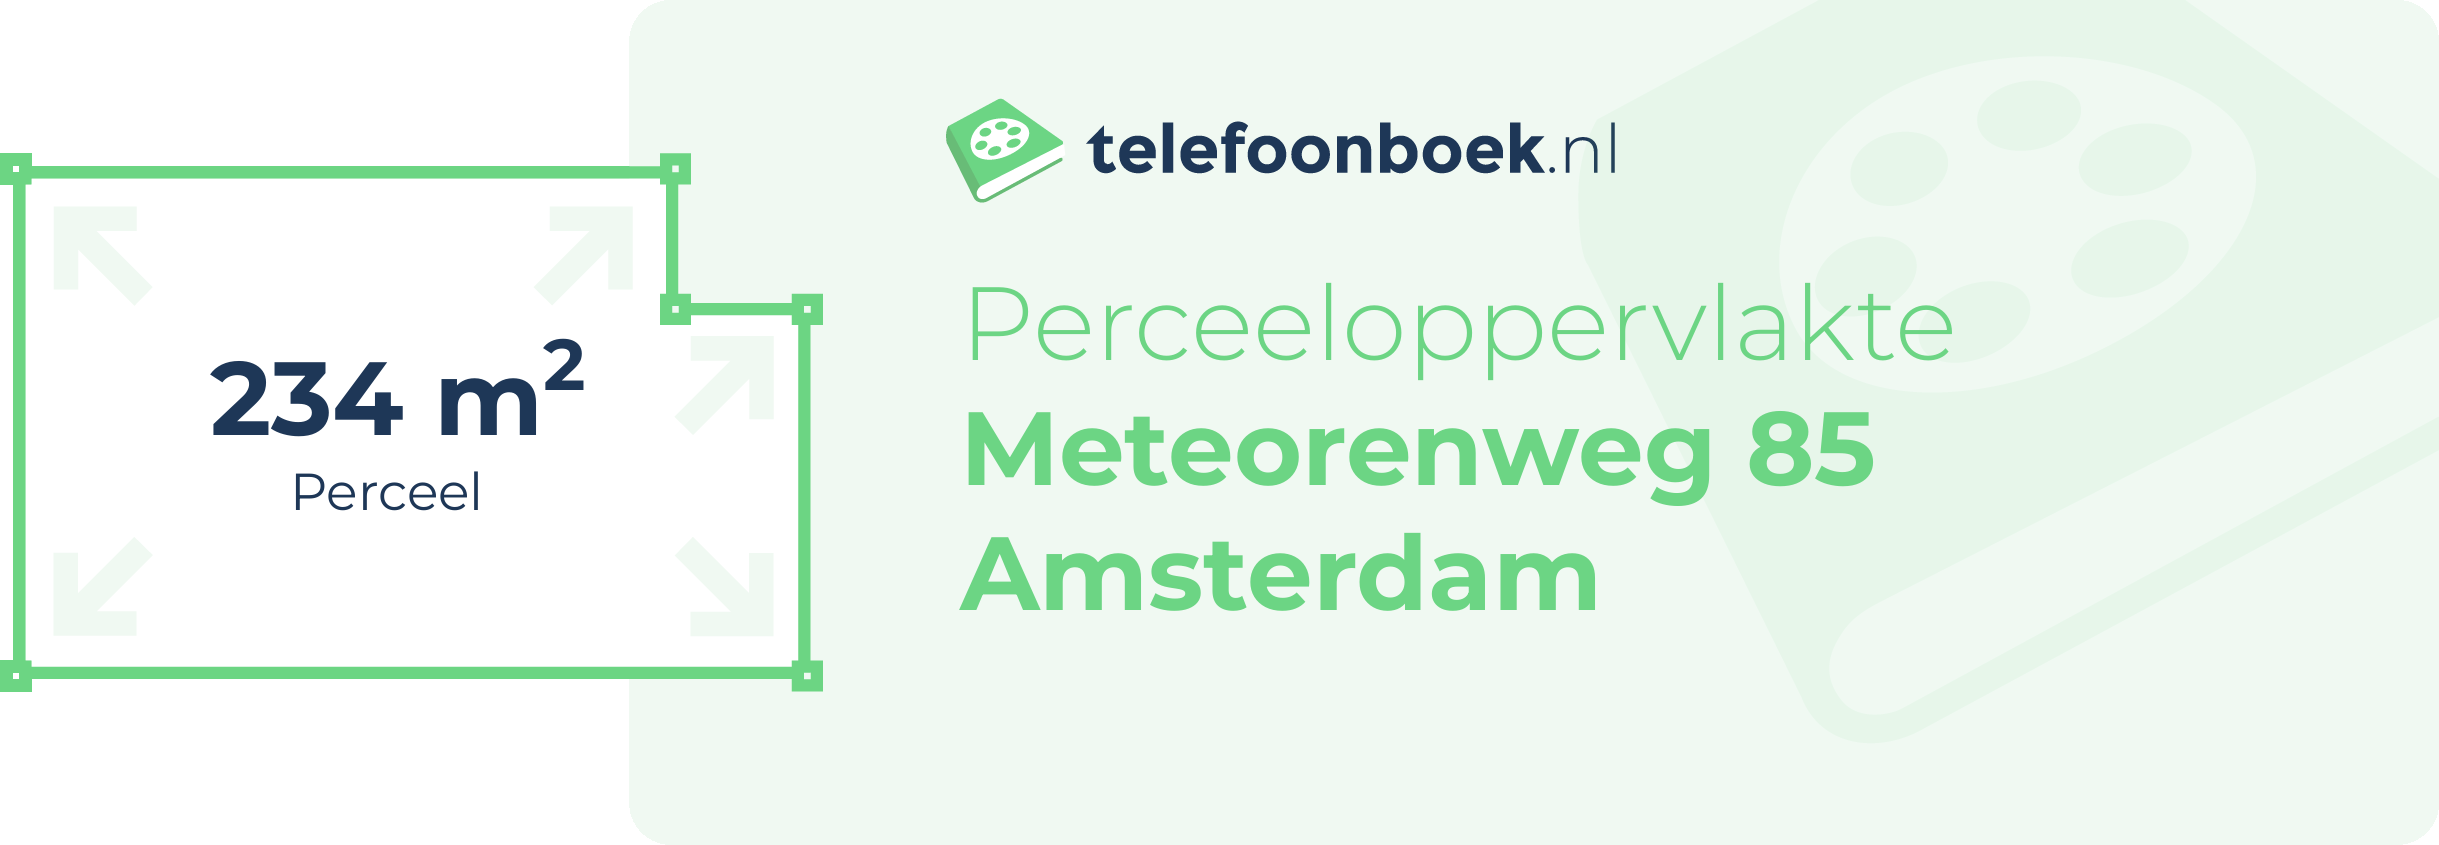 Perceeloppervlakte Meteorenweg 85 Amsterdam